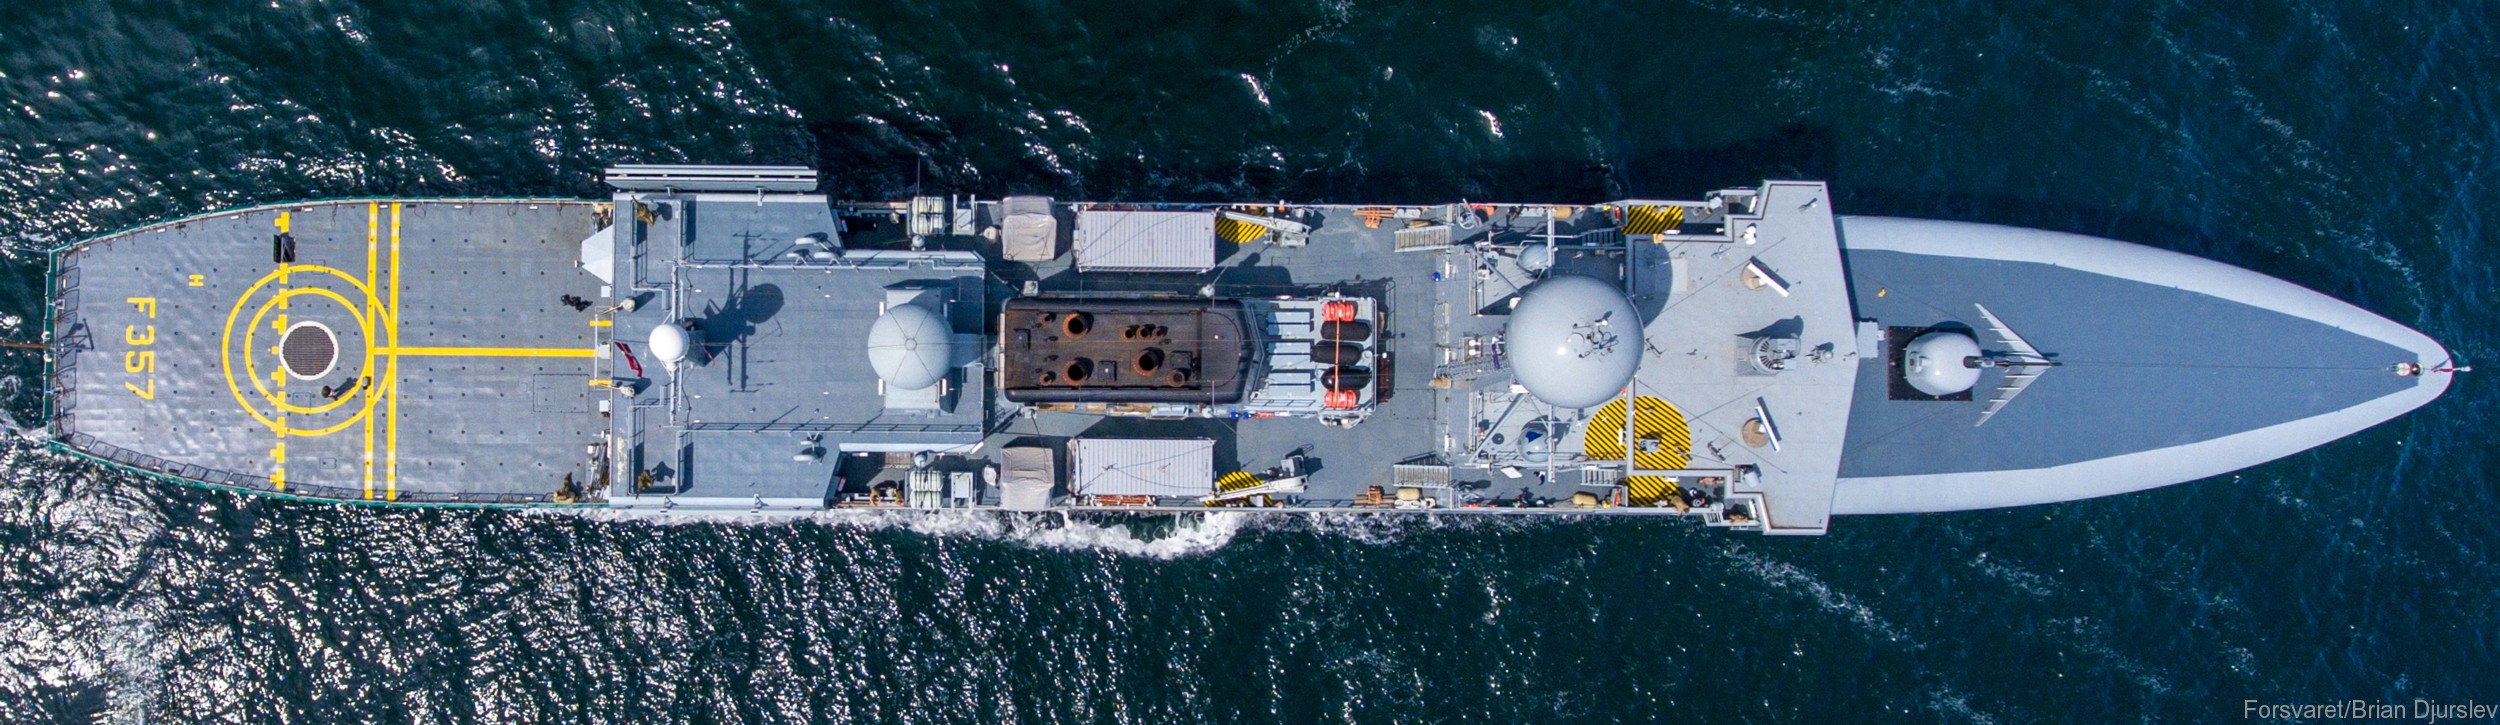 f-357 hdms thetis ocean patrol frigate royal danish navy kongelige danske marine inspektionsskibet 06